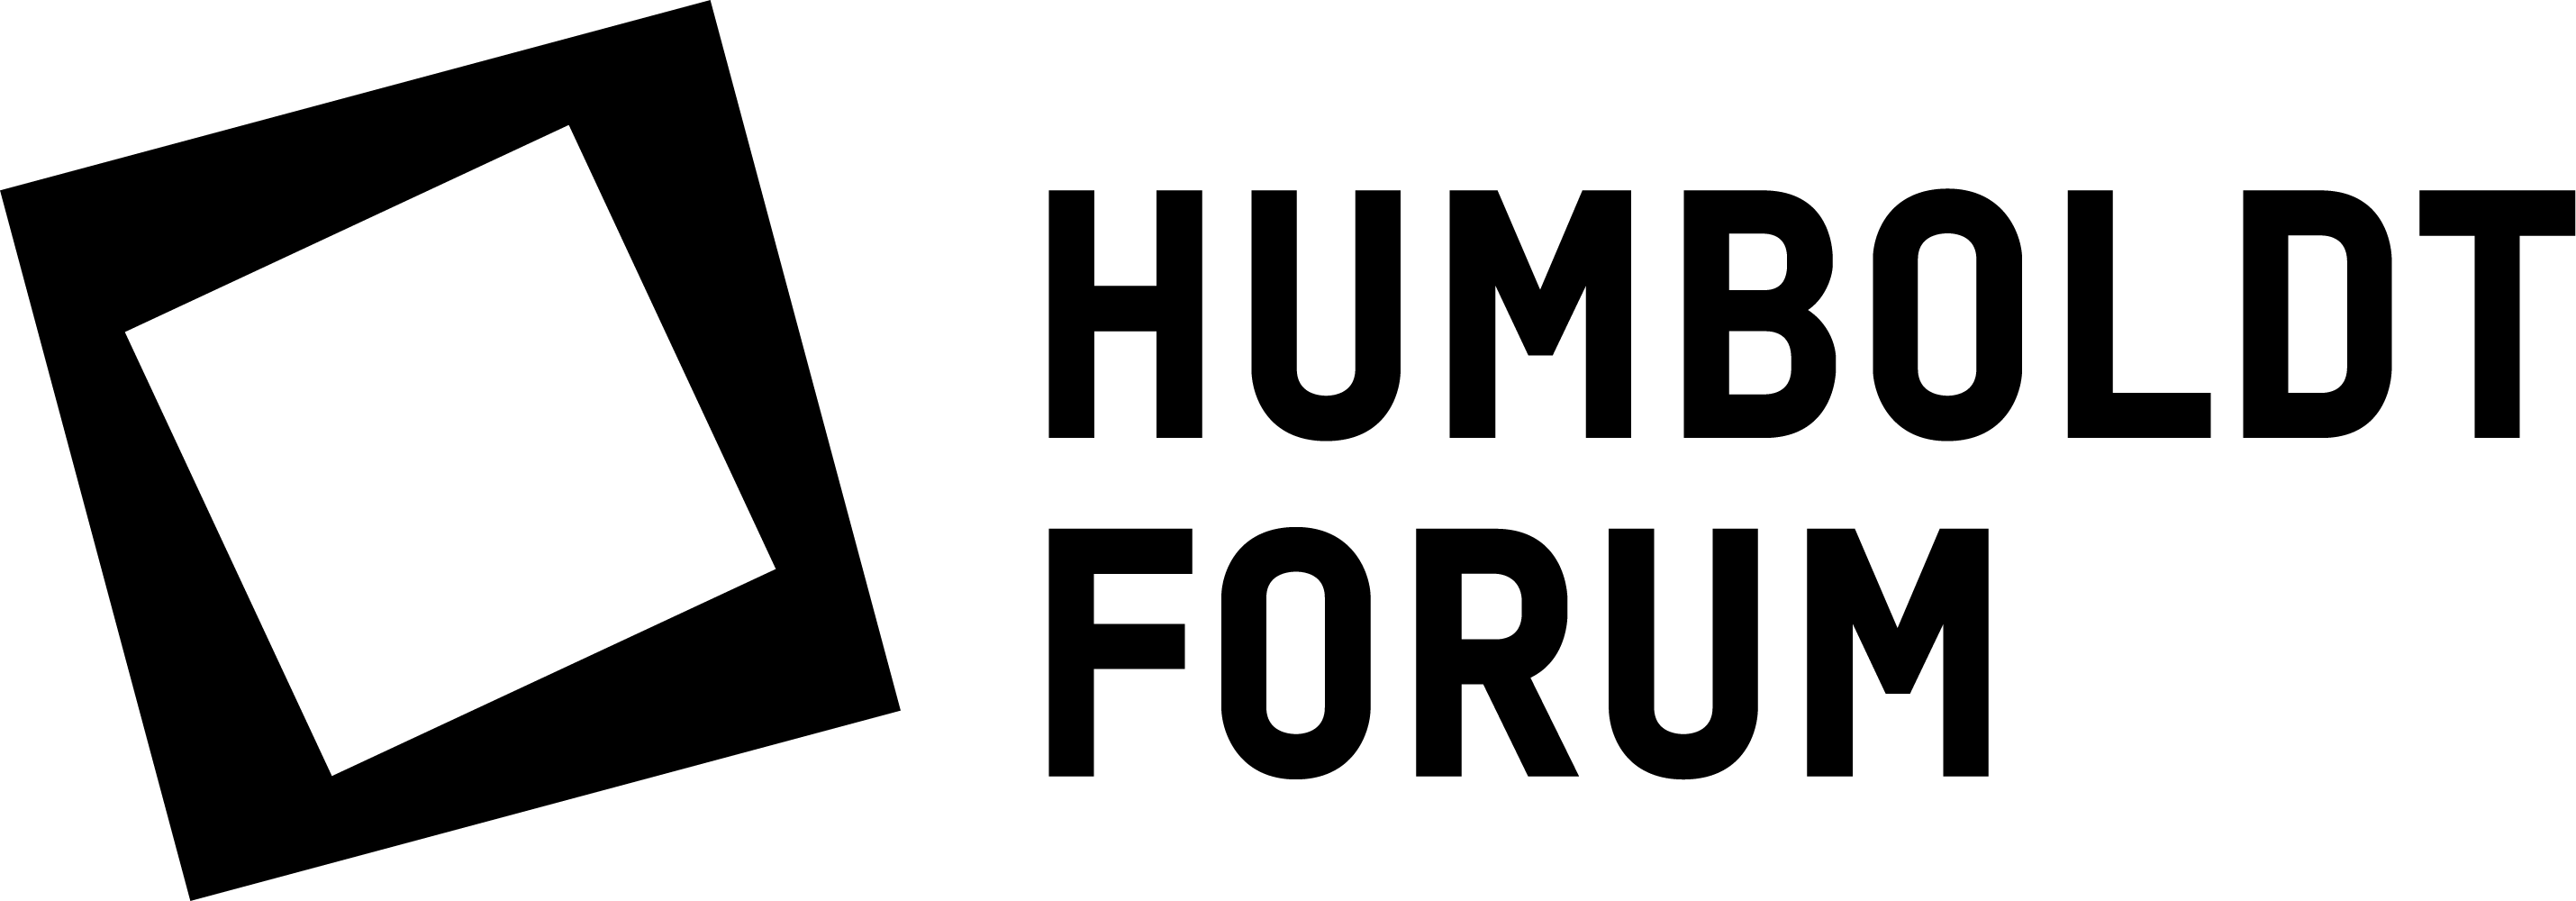 HumboldtForum Logo hor Black sRGB